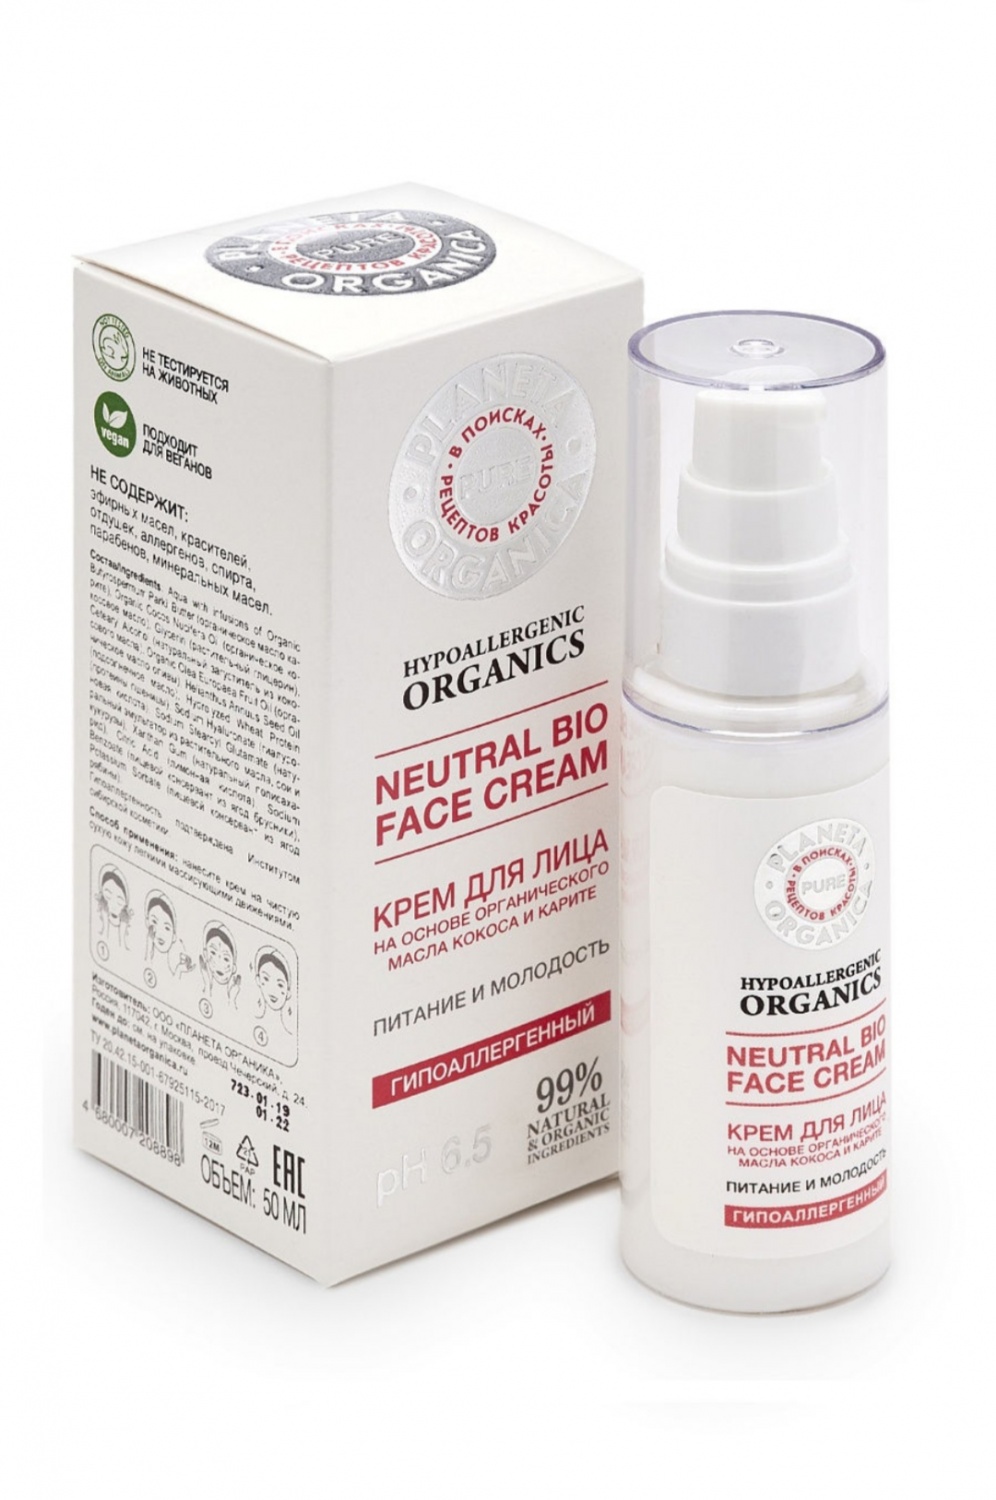 Крем для лица Planeta Organica Neutral bio face cream на основе органического масла кокоса и карите  фото